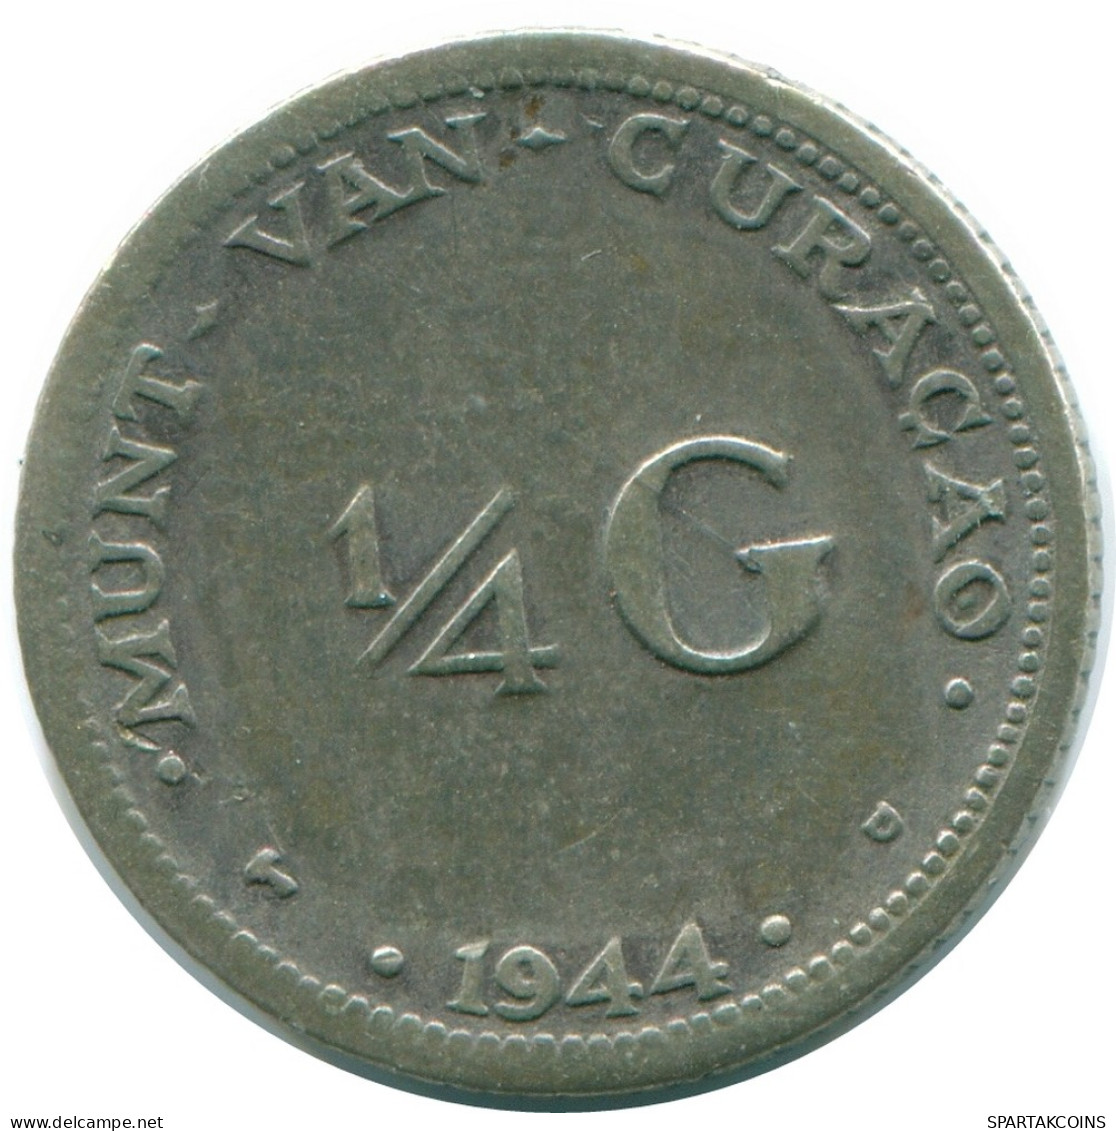 1/4 GULDEN 1944 CURACAO Netherlands SILVER Colonial Coin #NL10608.4.U - Curacao